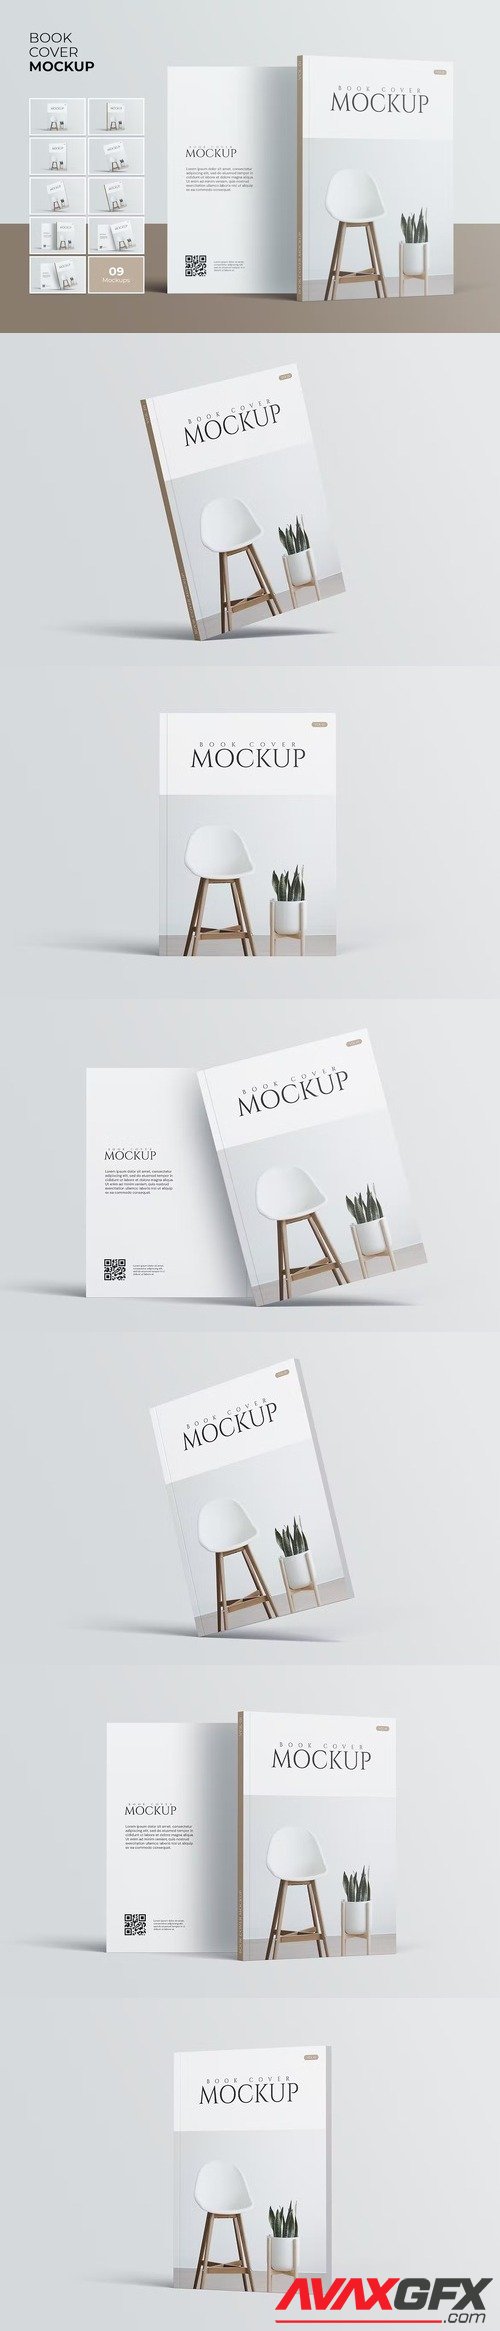 Book Cover Mockup [PSD]